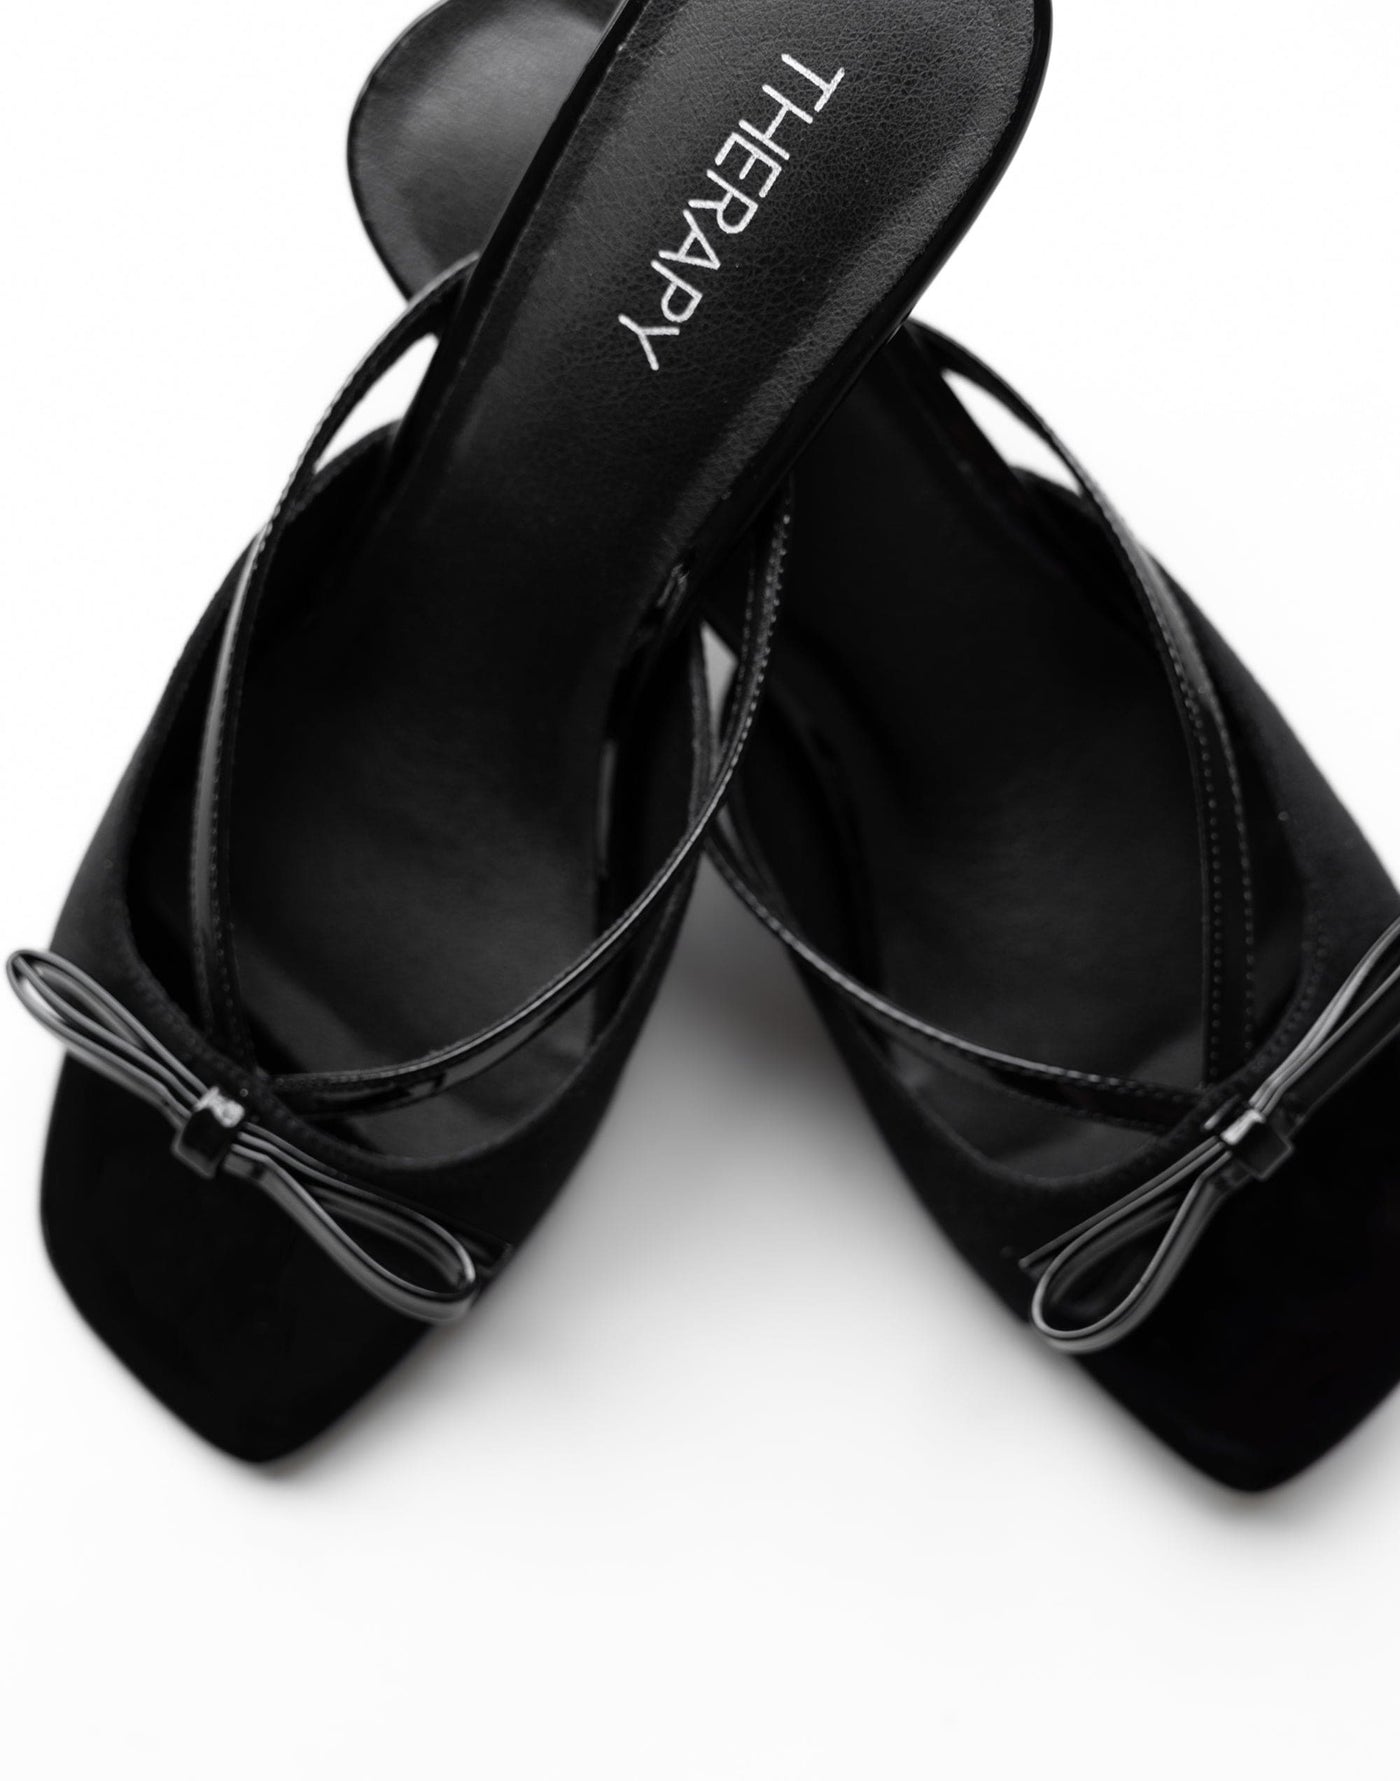 Lulu Heel (Black Microsuede) - By Therapy - Kitten Open Toe Bow Detail Heel - Women's Shoes - Charcoal Clothing